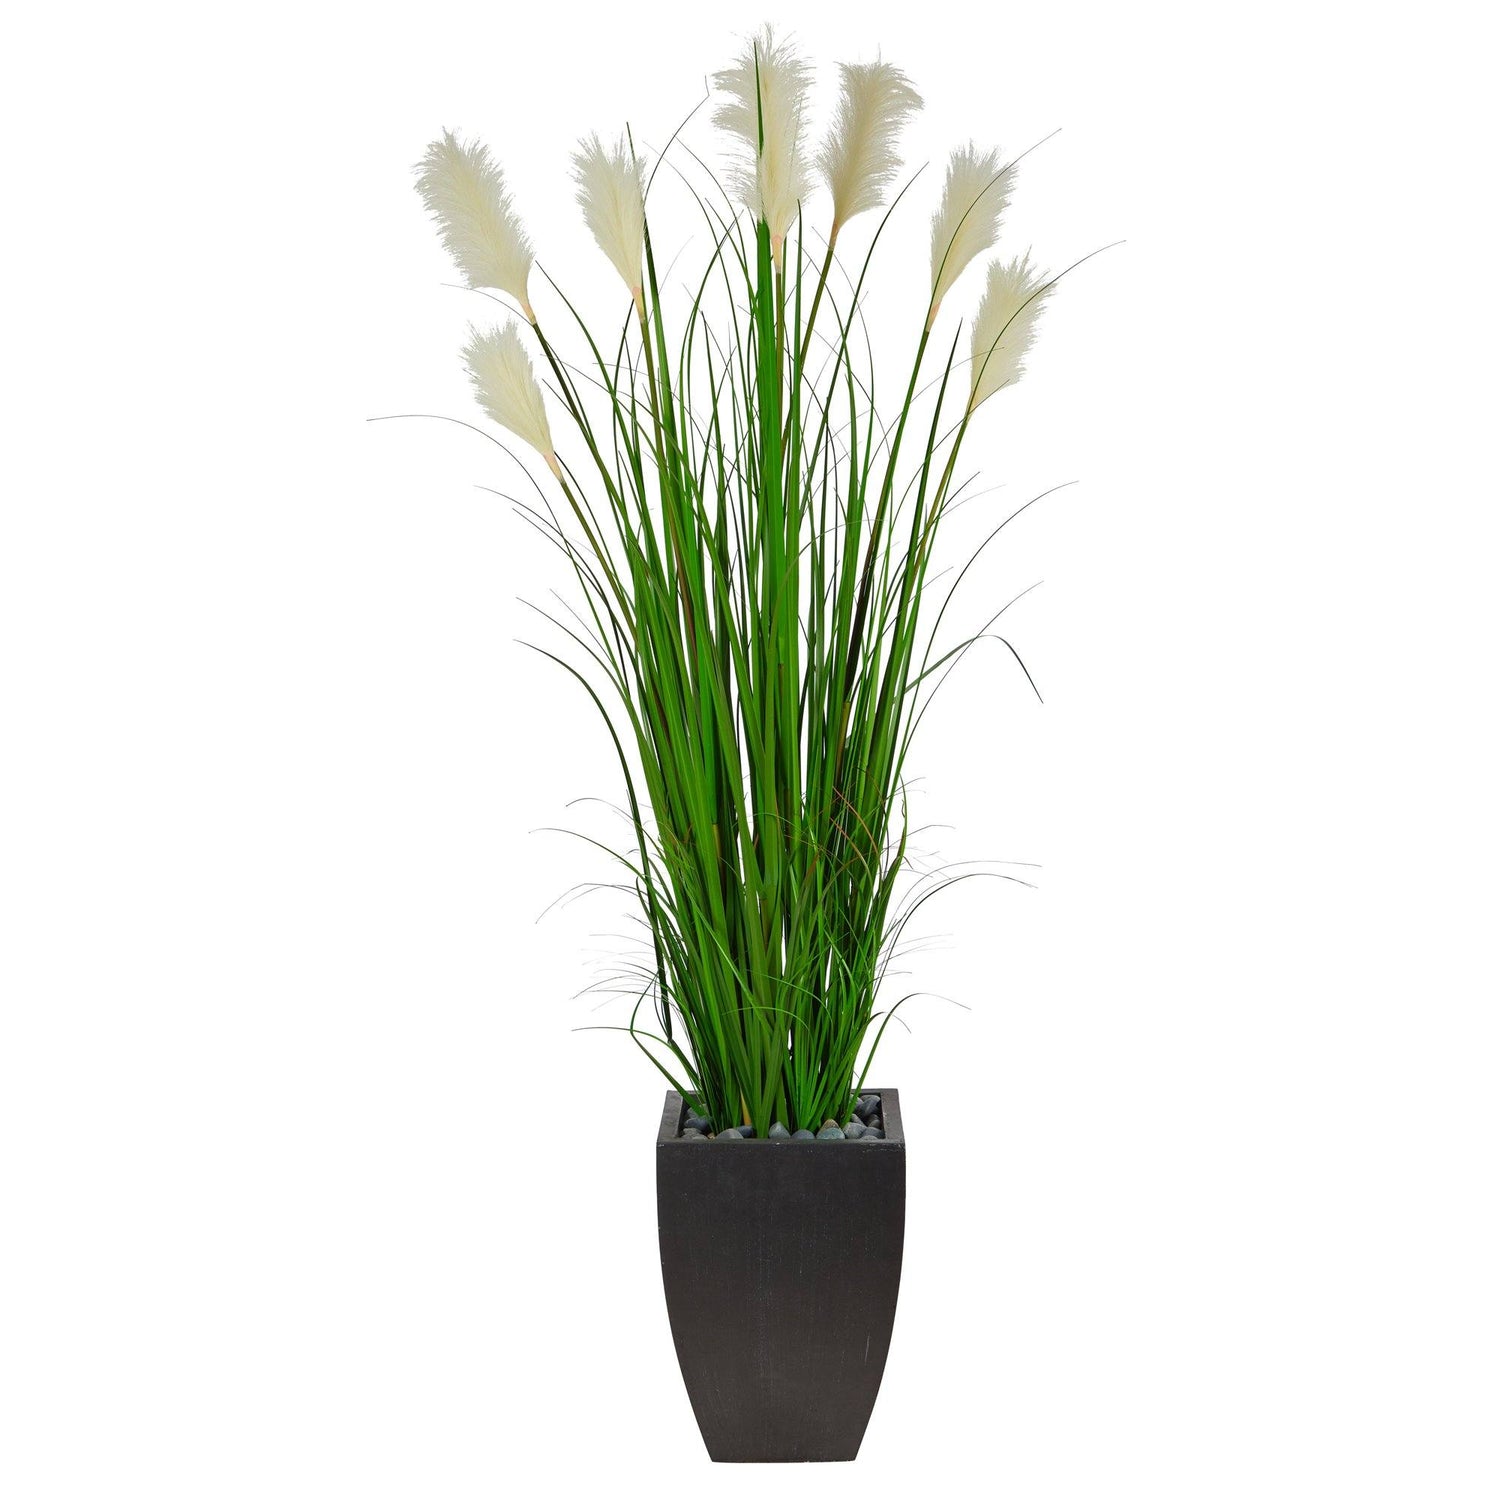 64” Wheat Plum Grass Artificial Plant in Black Planter